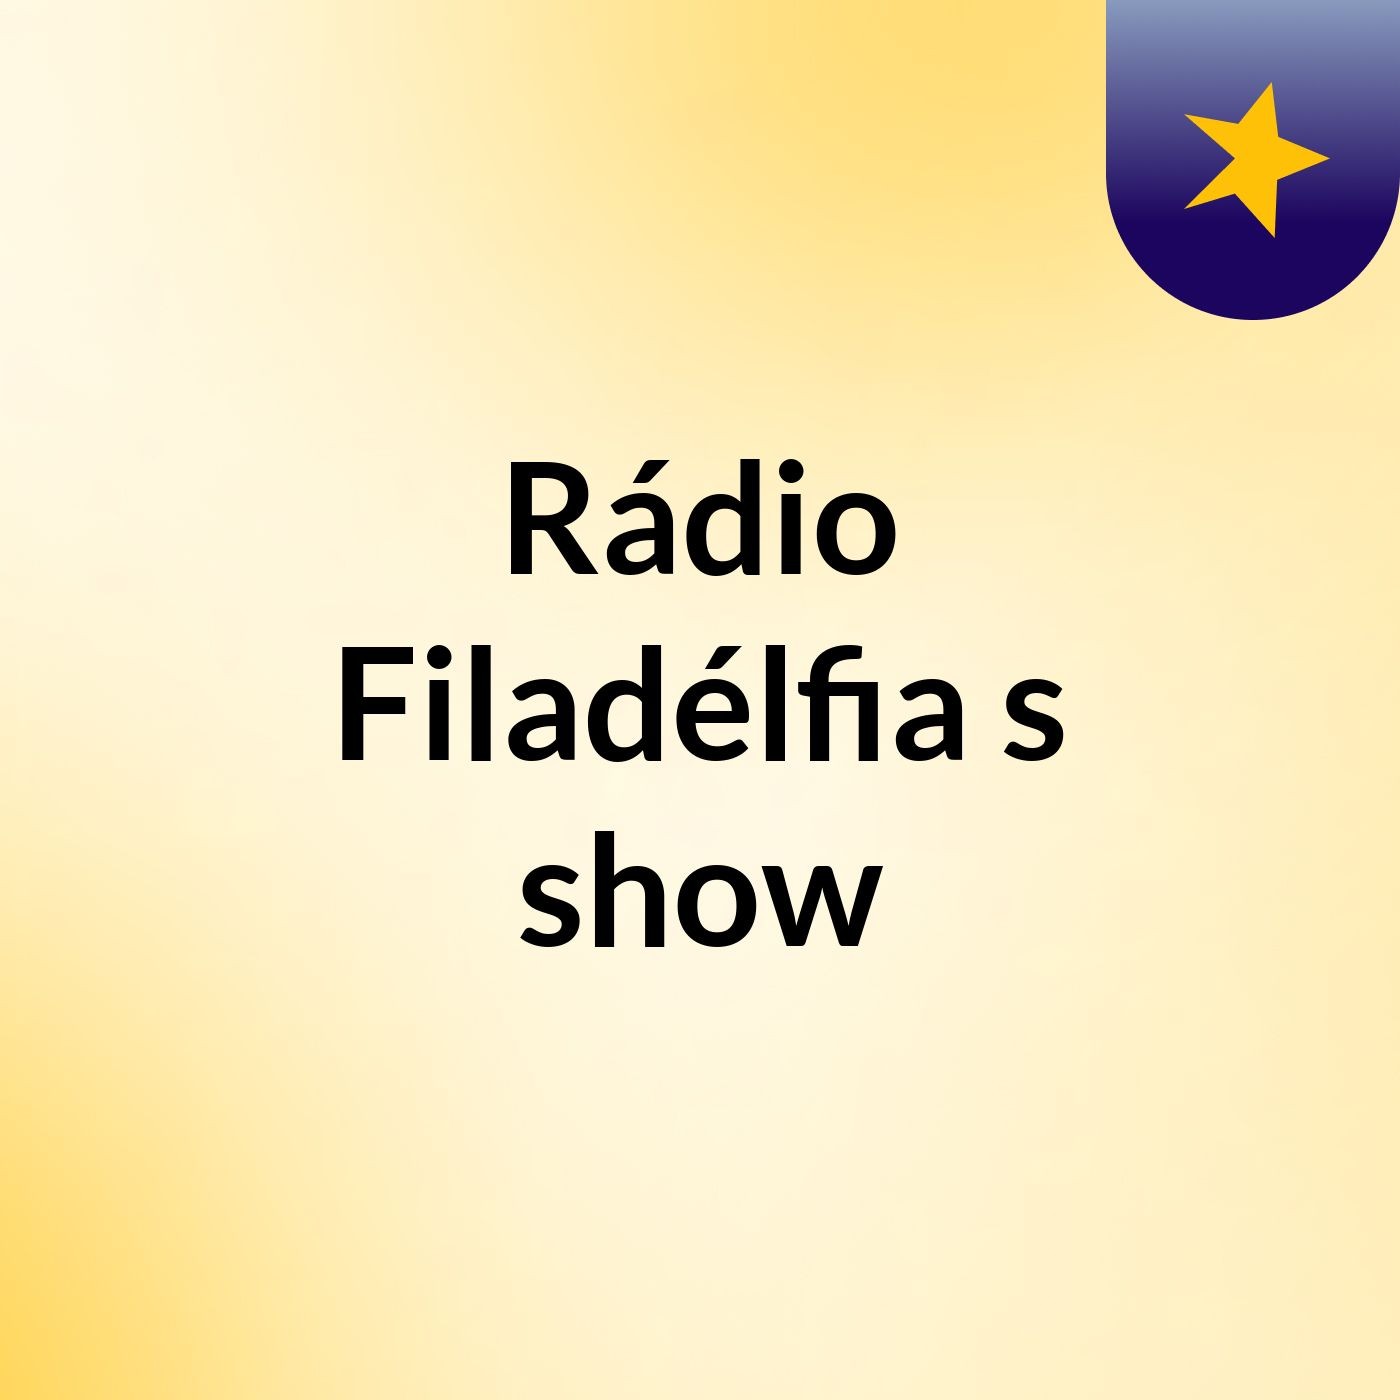 Rádio Filadélfia's show